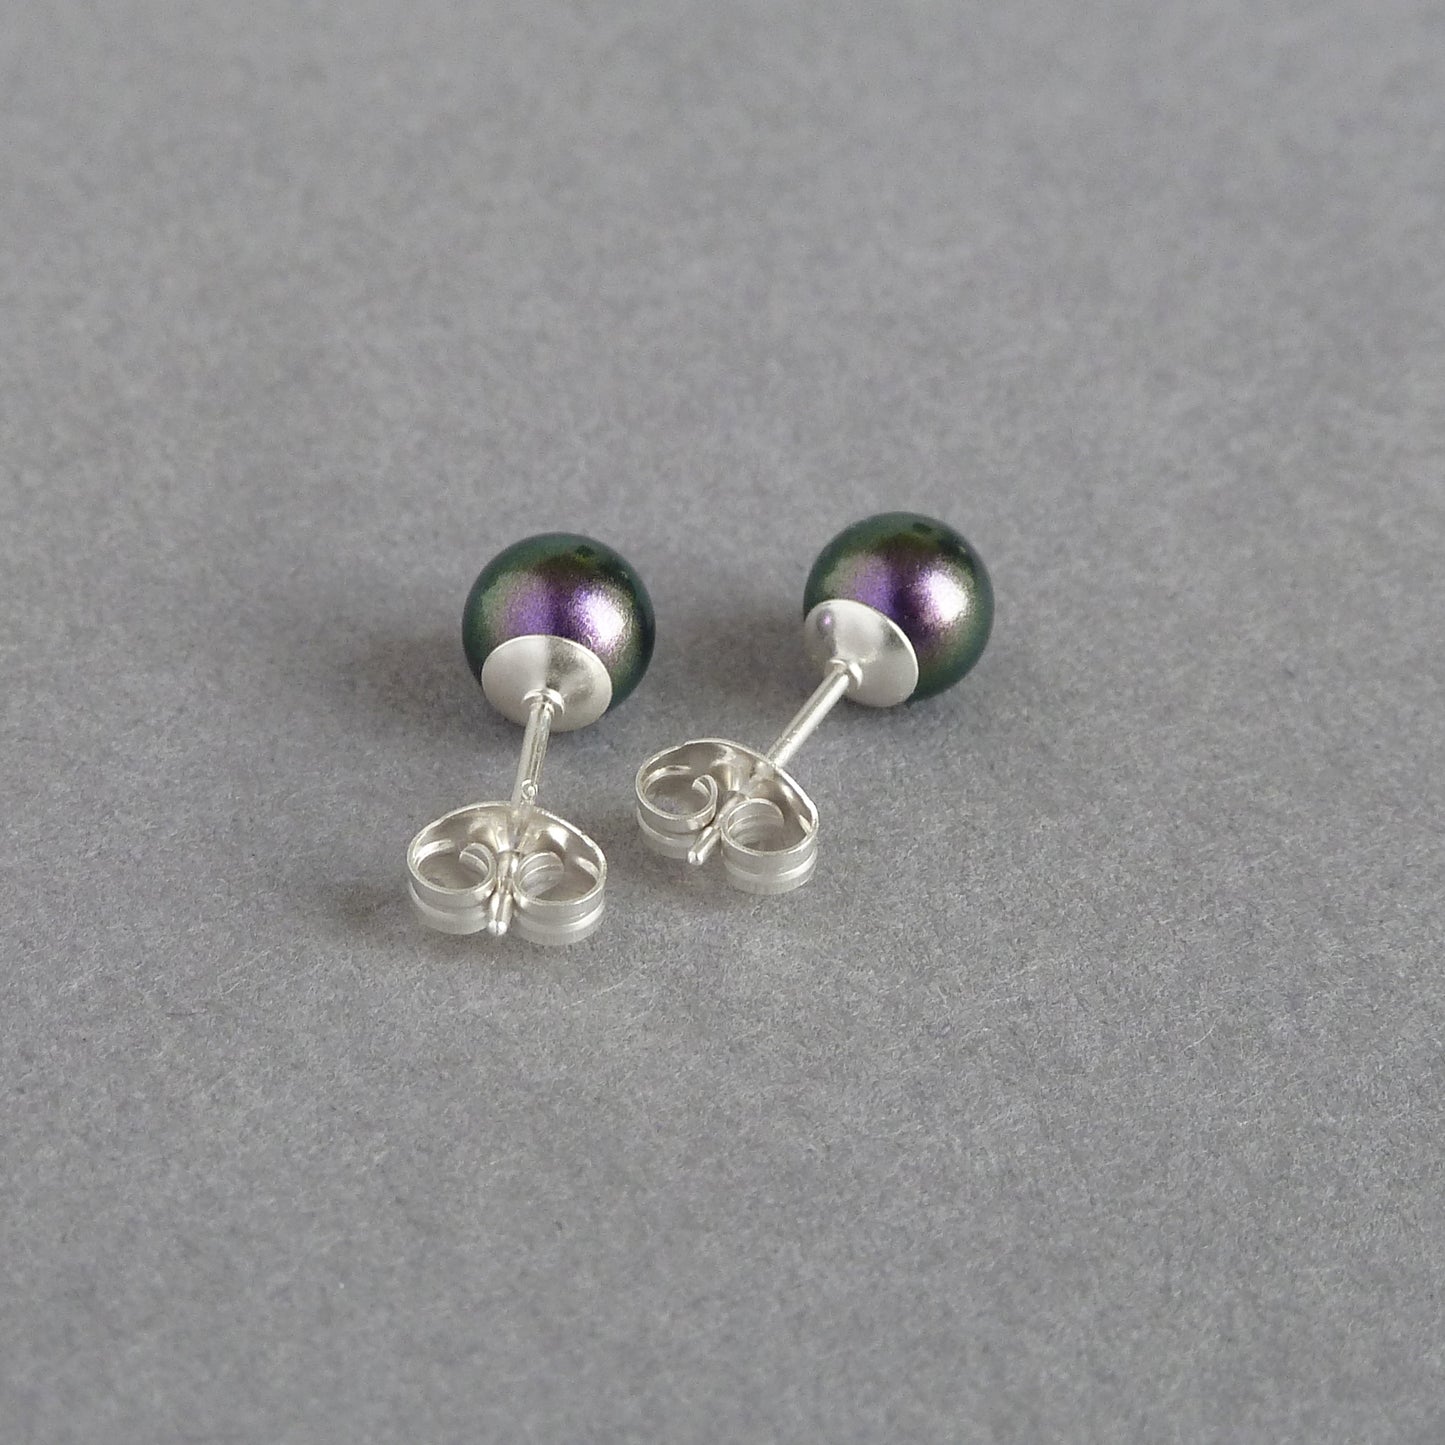 Small dark purple stud earrings